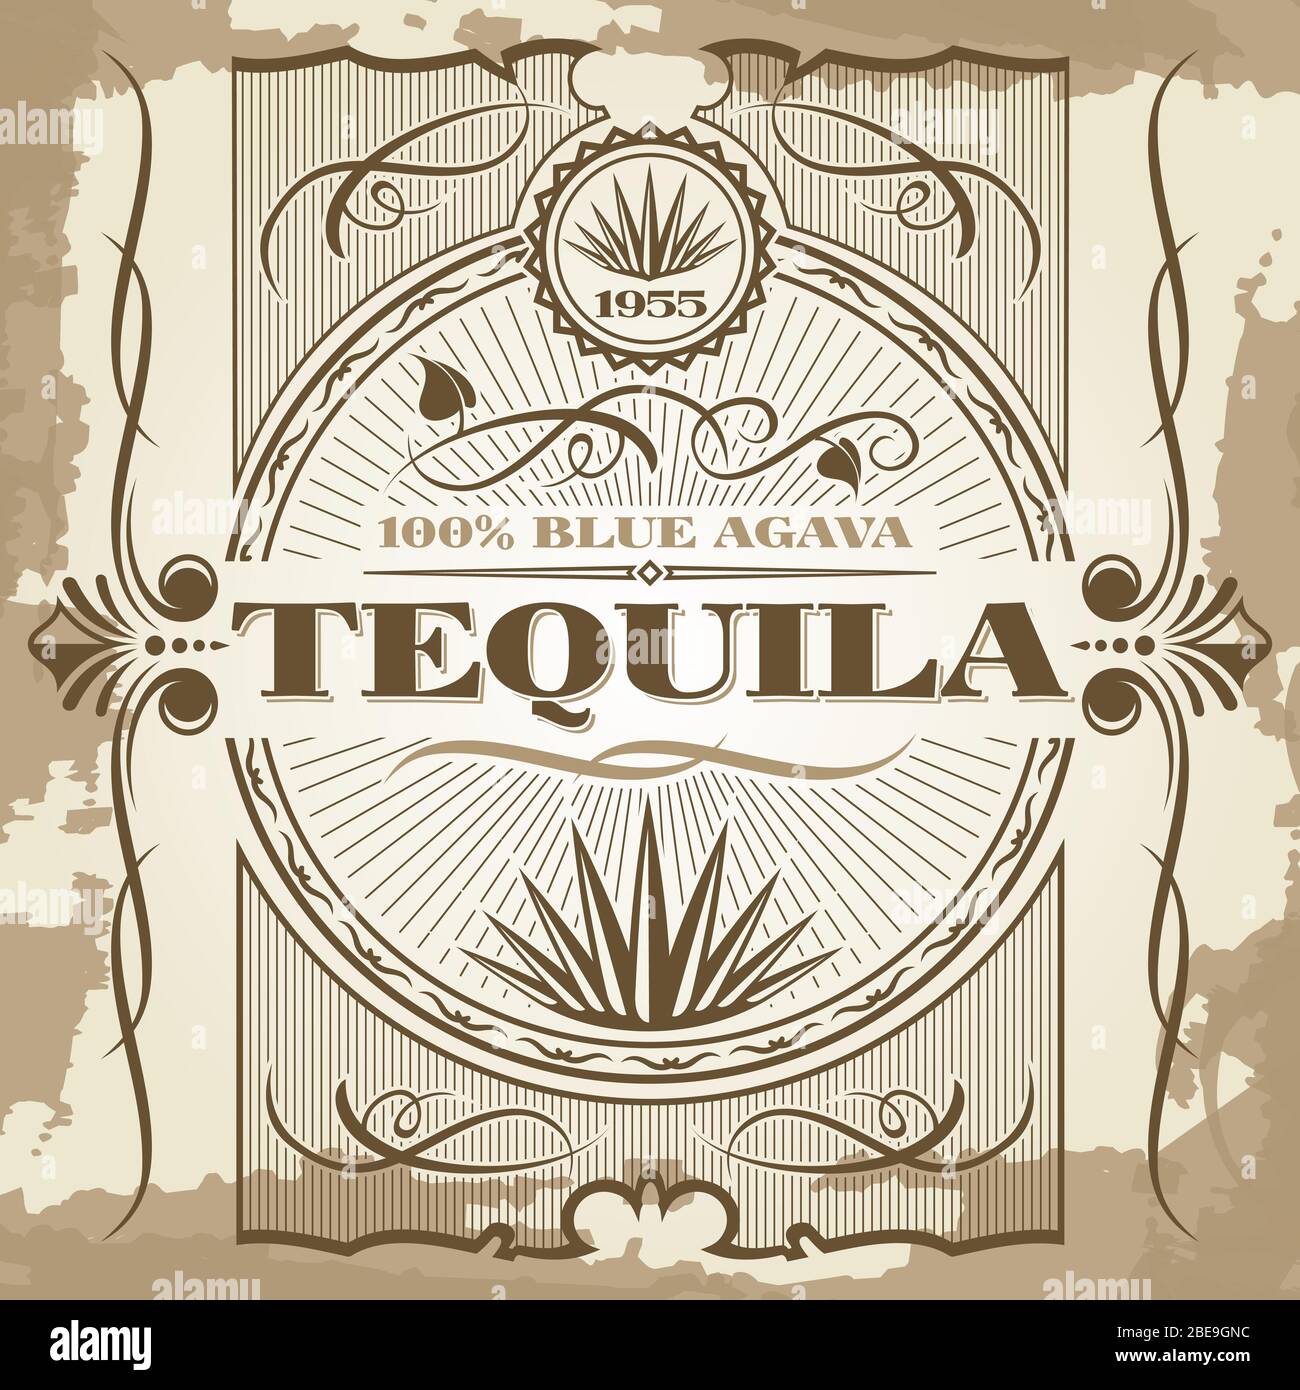 Vintage tequila vector poster design. Banner bar retro illustration style Stock Vector